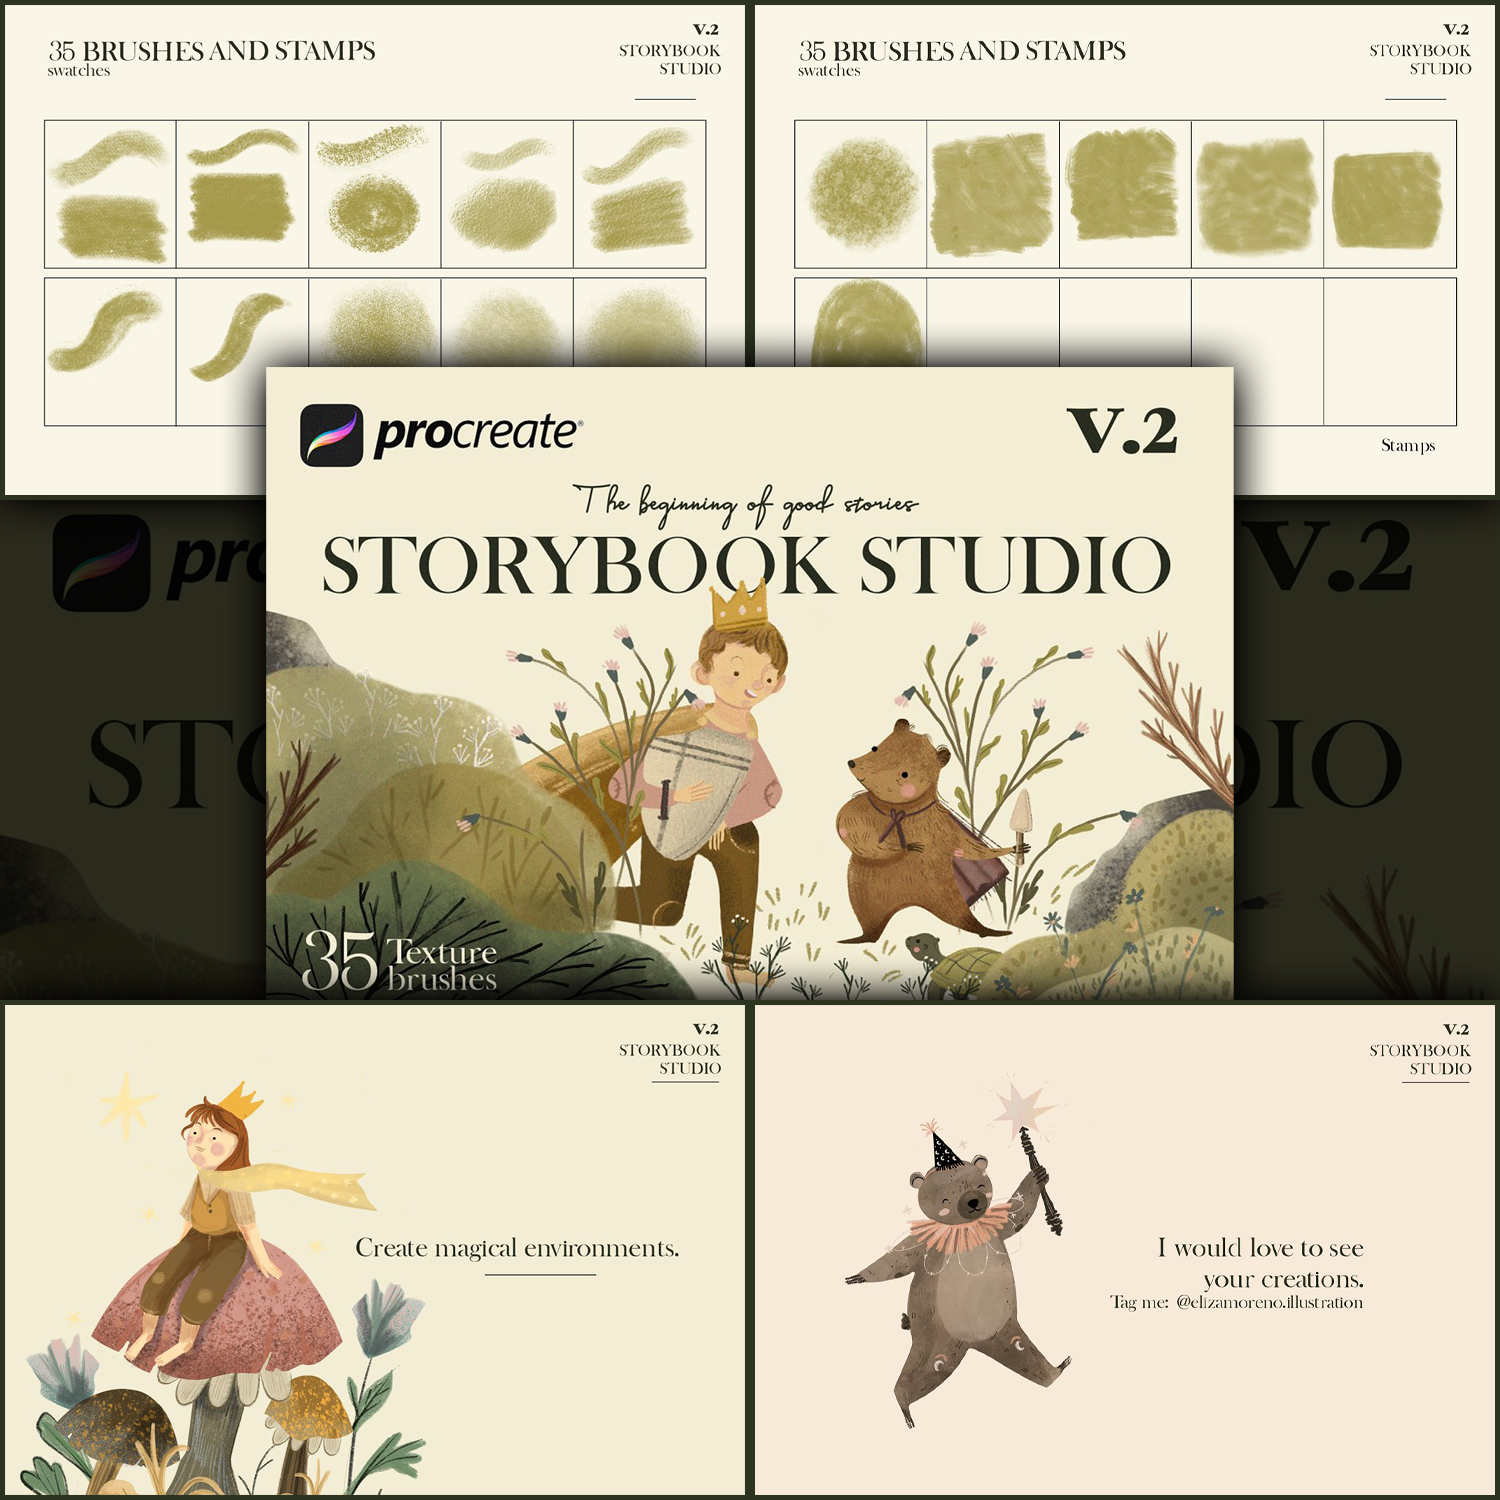 Images with storybook studio v2 procreate.